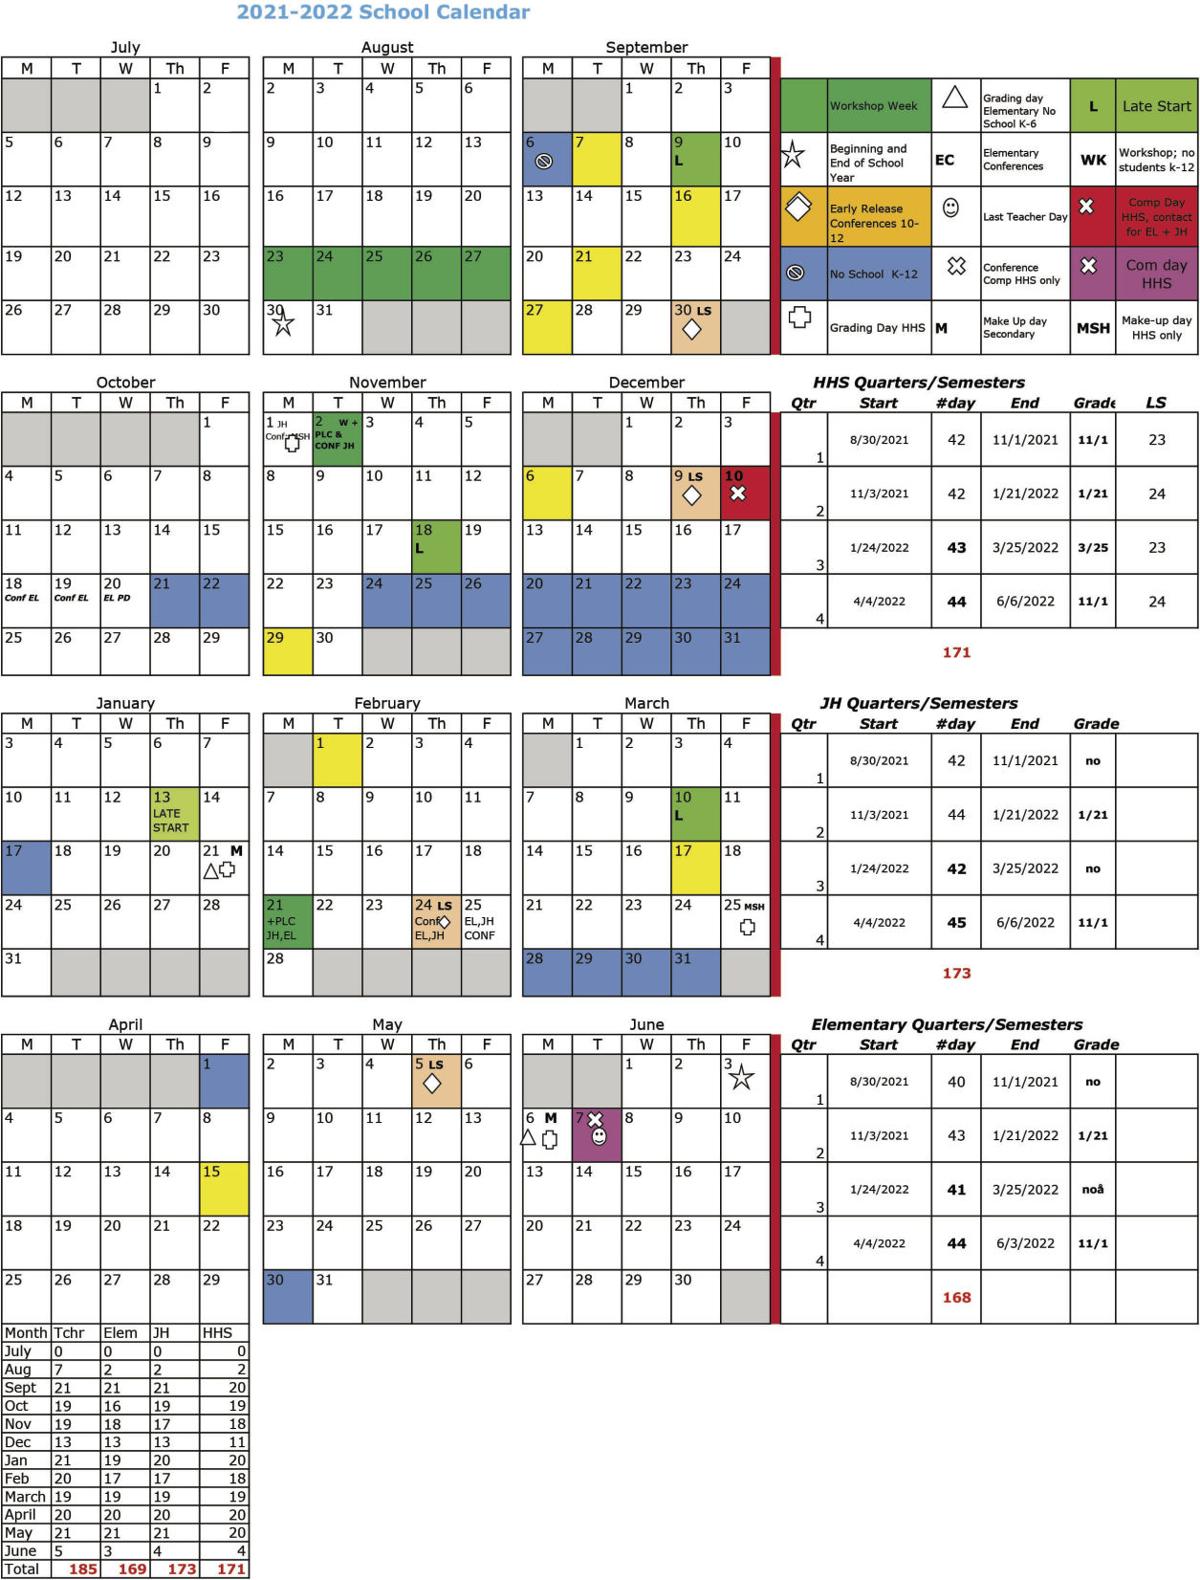 harris isd calendar 2021 22 Hopkins School Board Approves 2020 21 And 2021 22 Calendars Hopkins Hometownsource Com harris isd calendar 2021 22